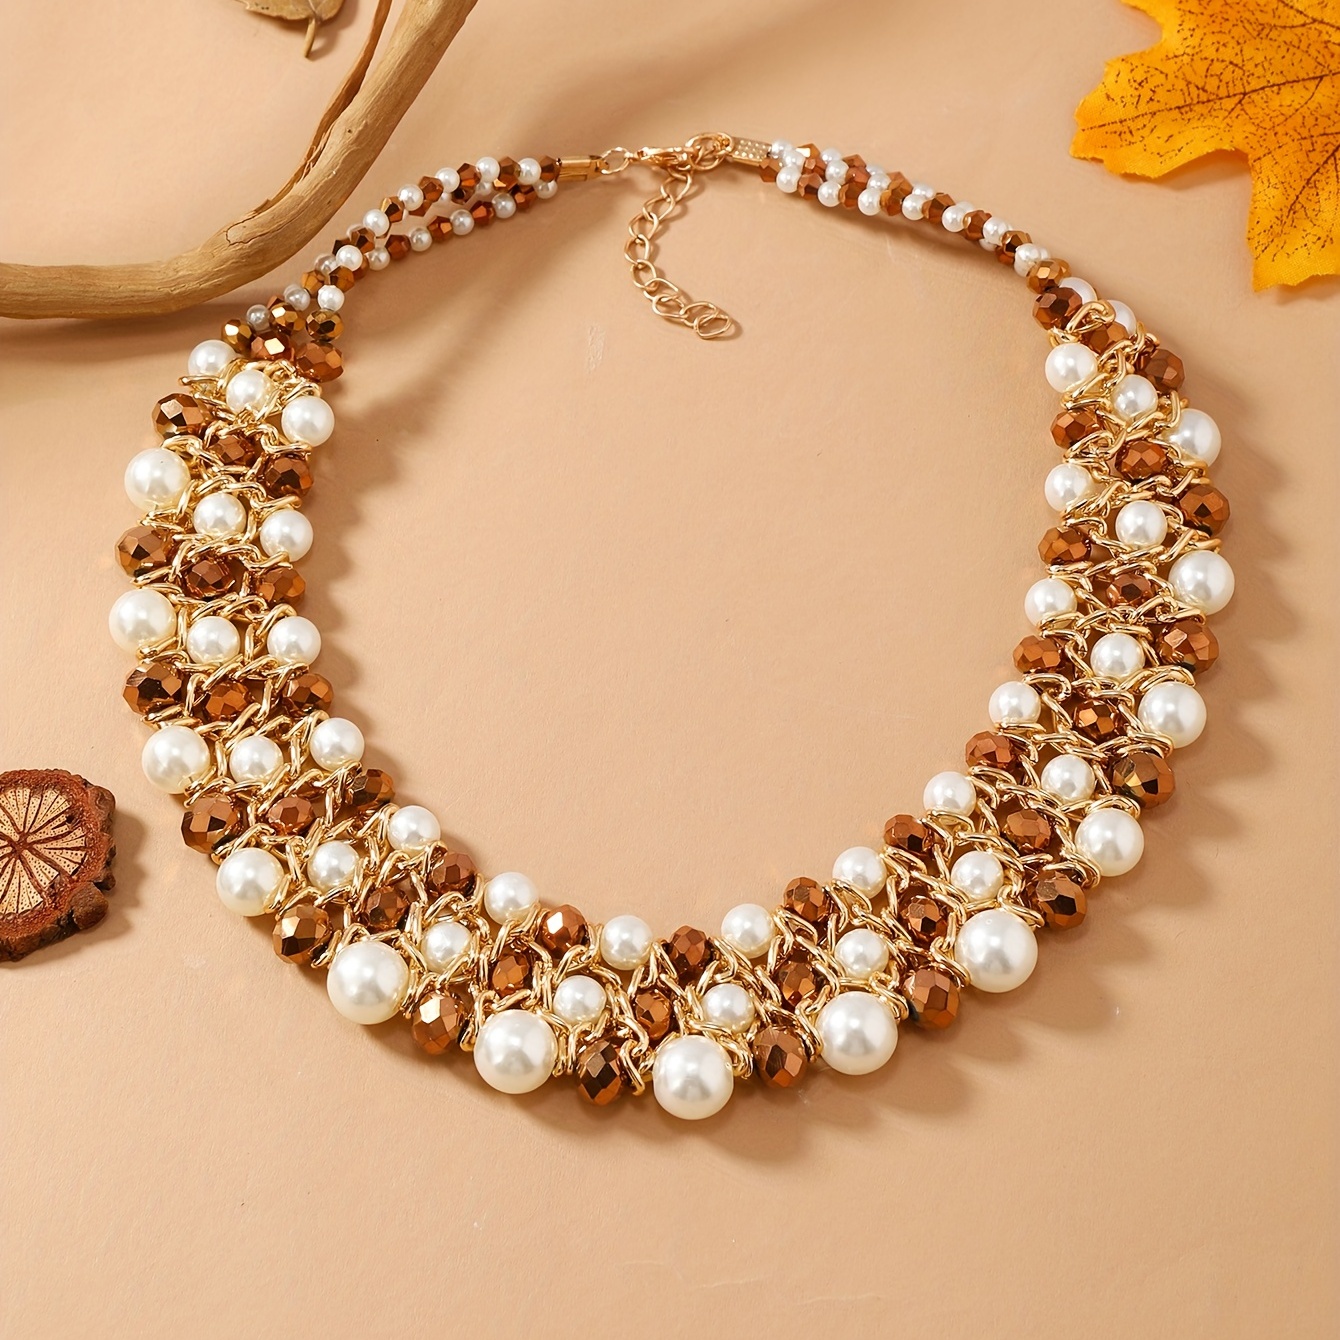 Three Strand Necklace Swarovski Beads and Pearls 